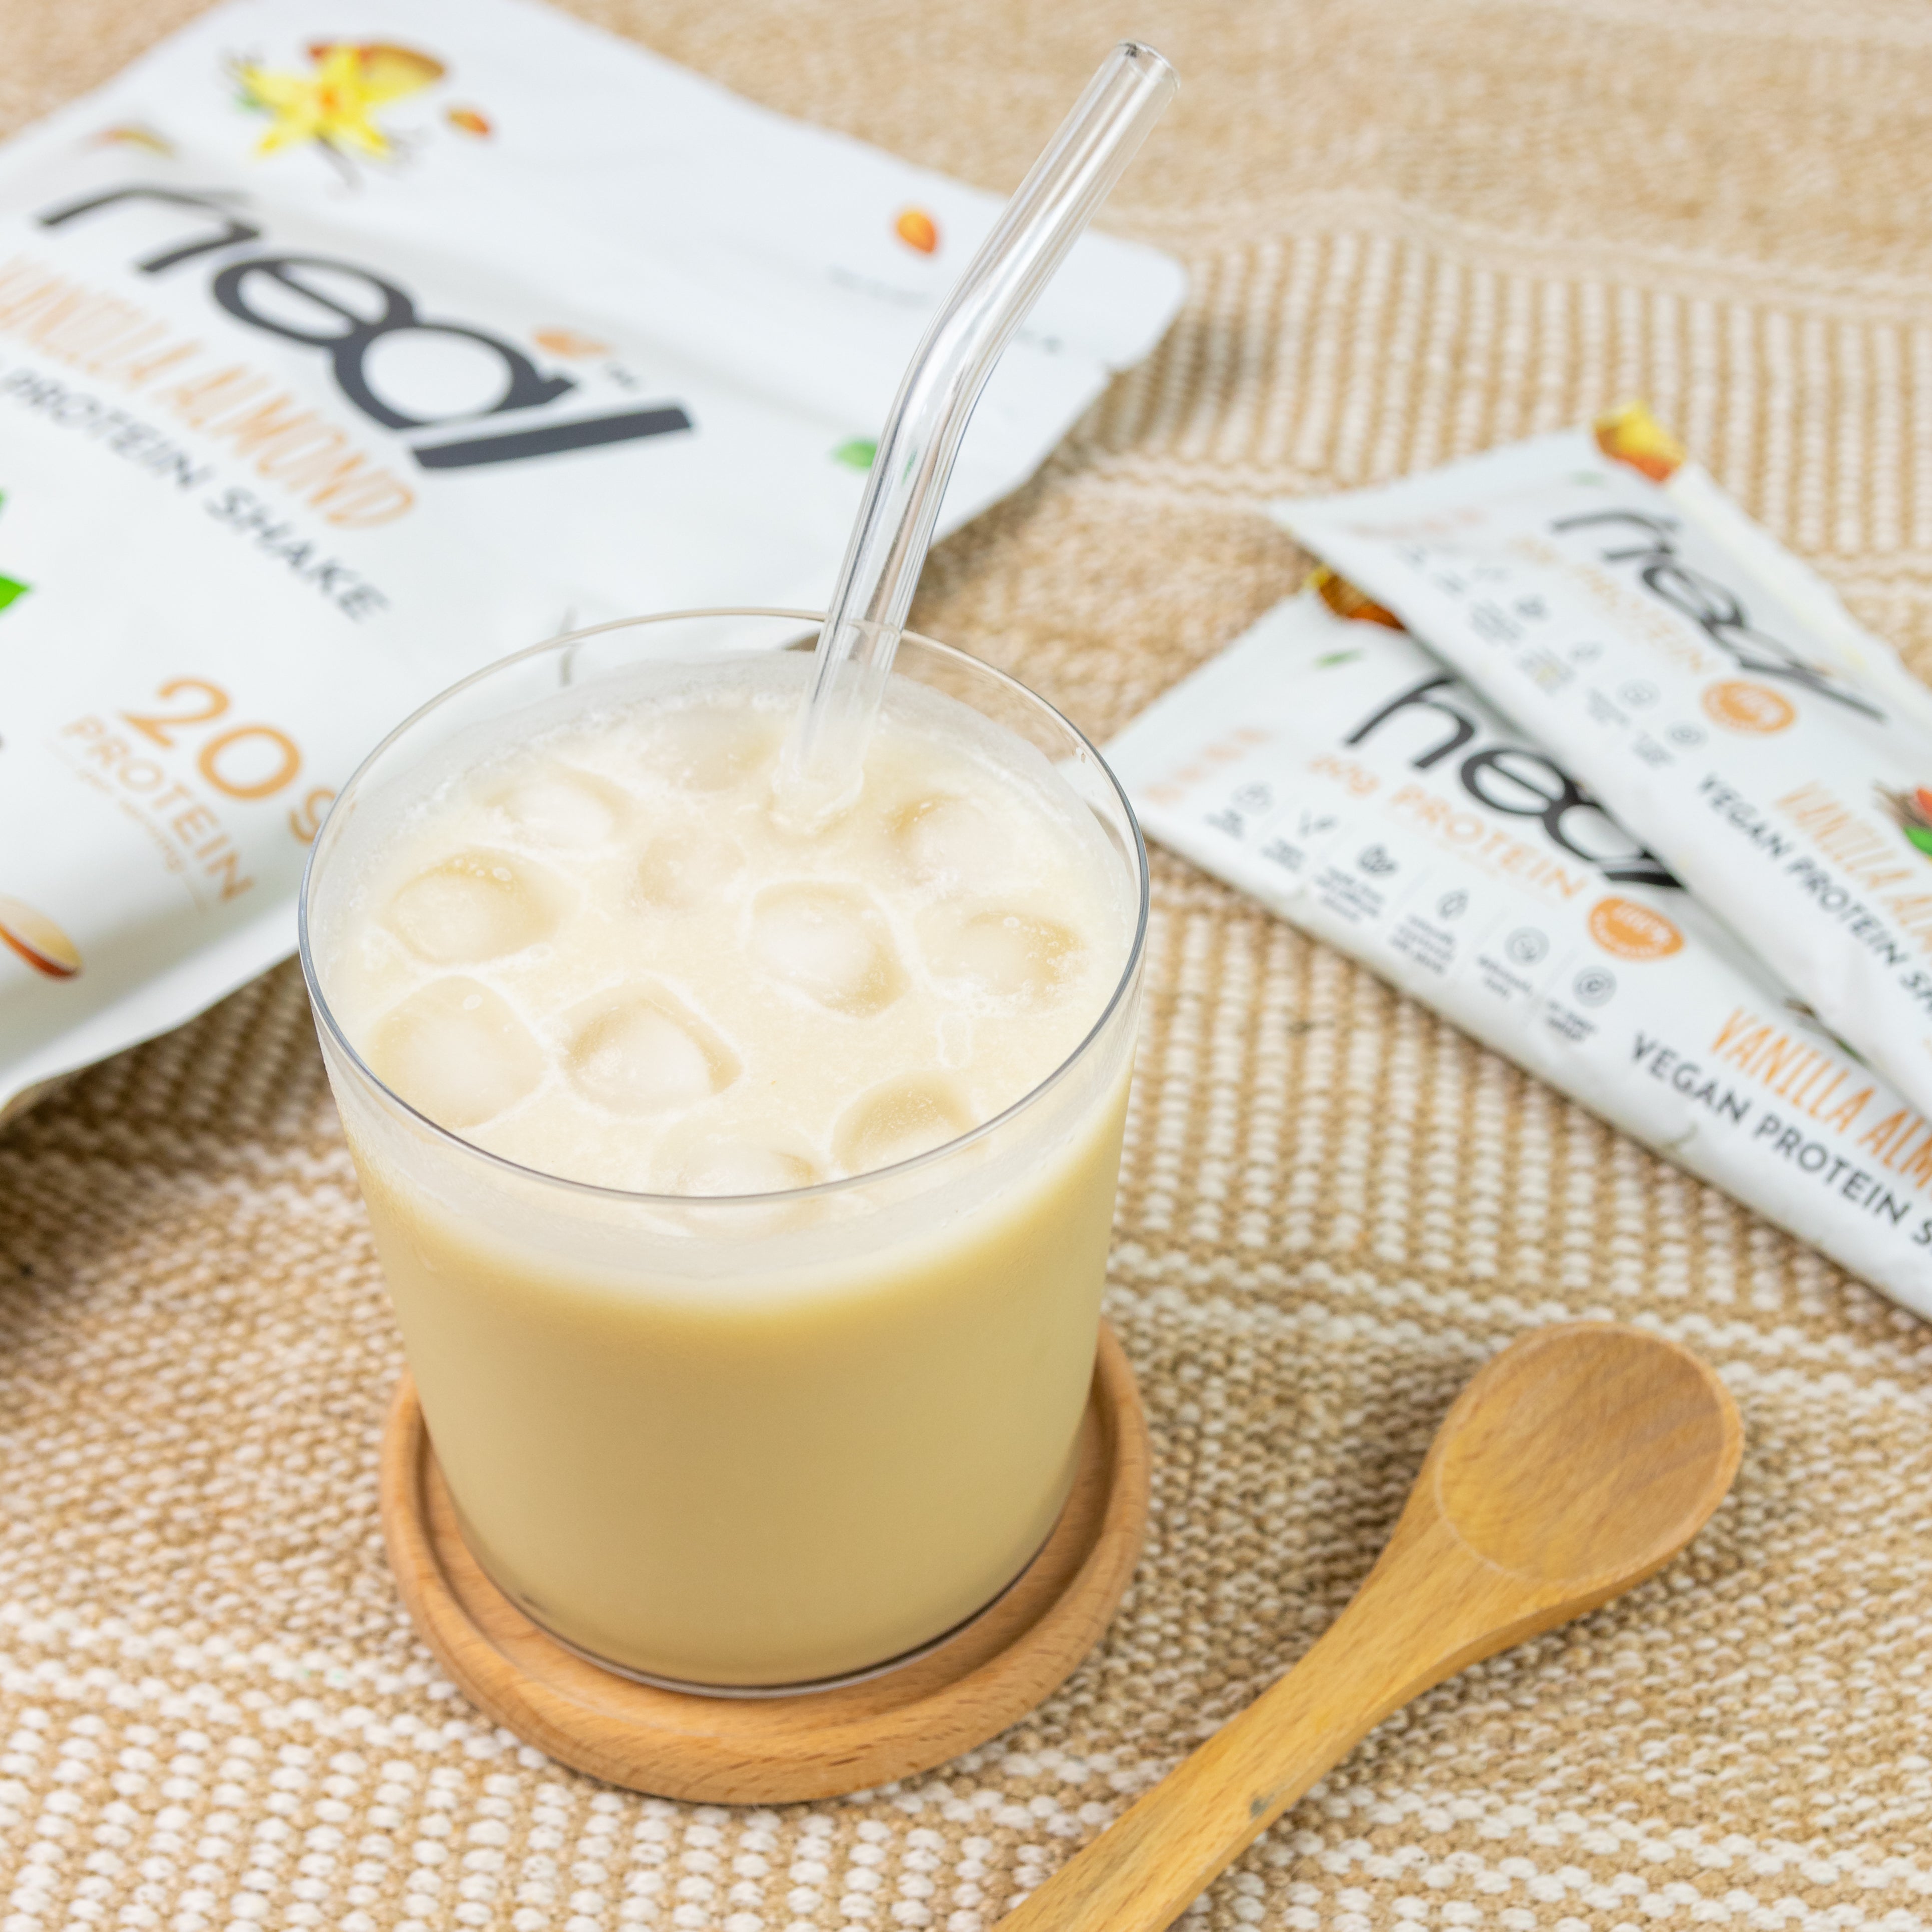 Heal Vanilla Almond Vegan Protein Shake, 15 Servings Value Pack